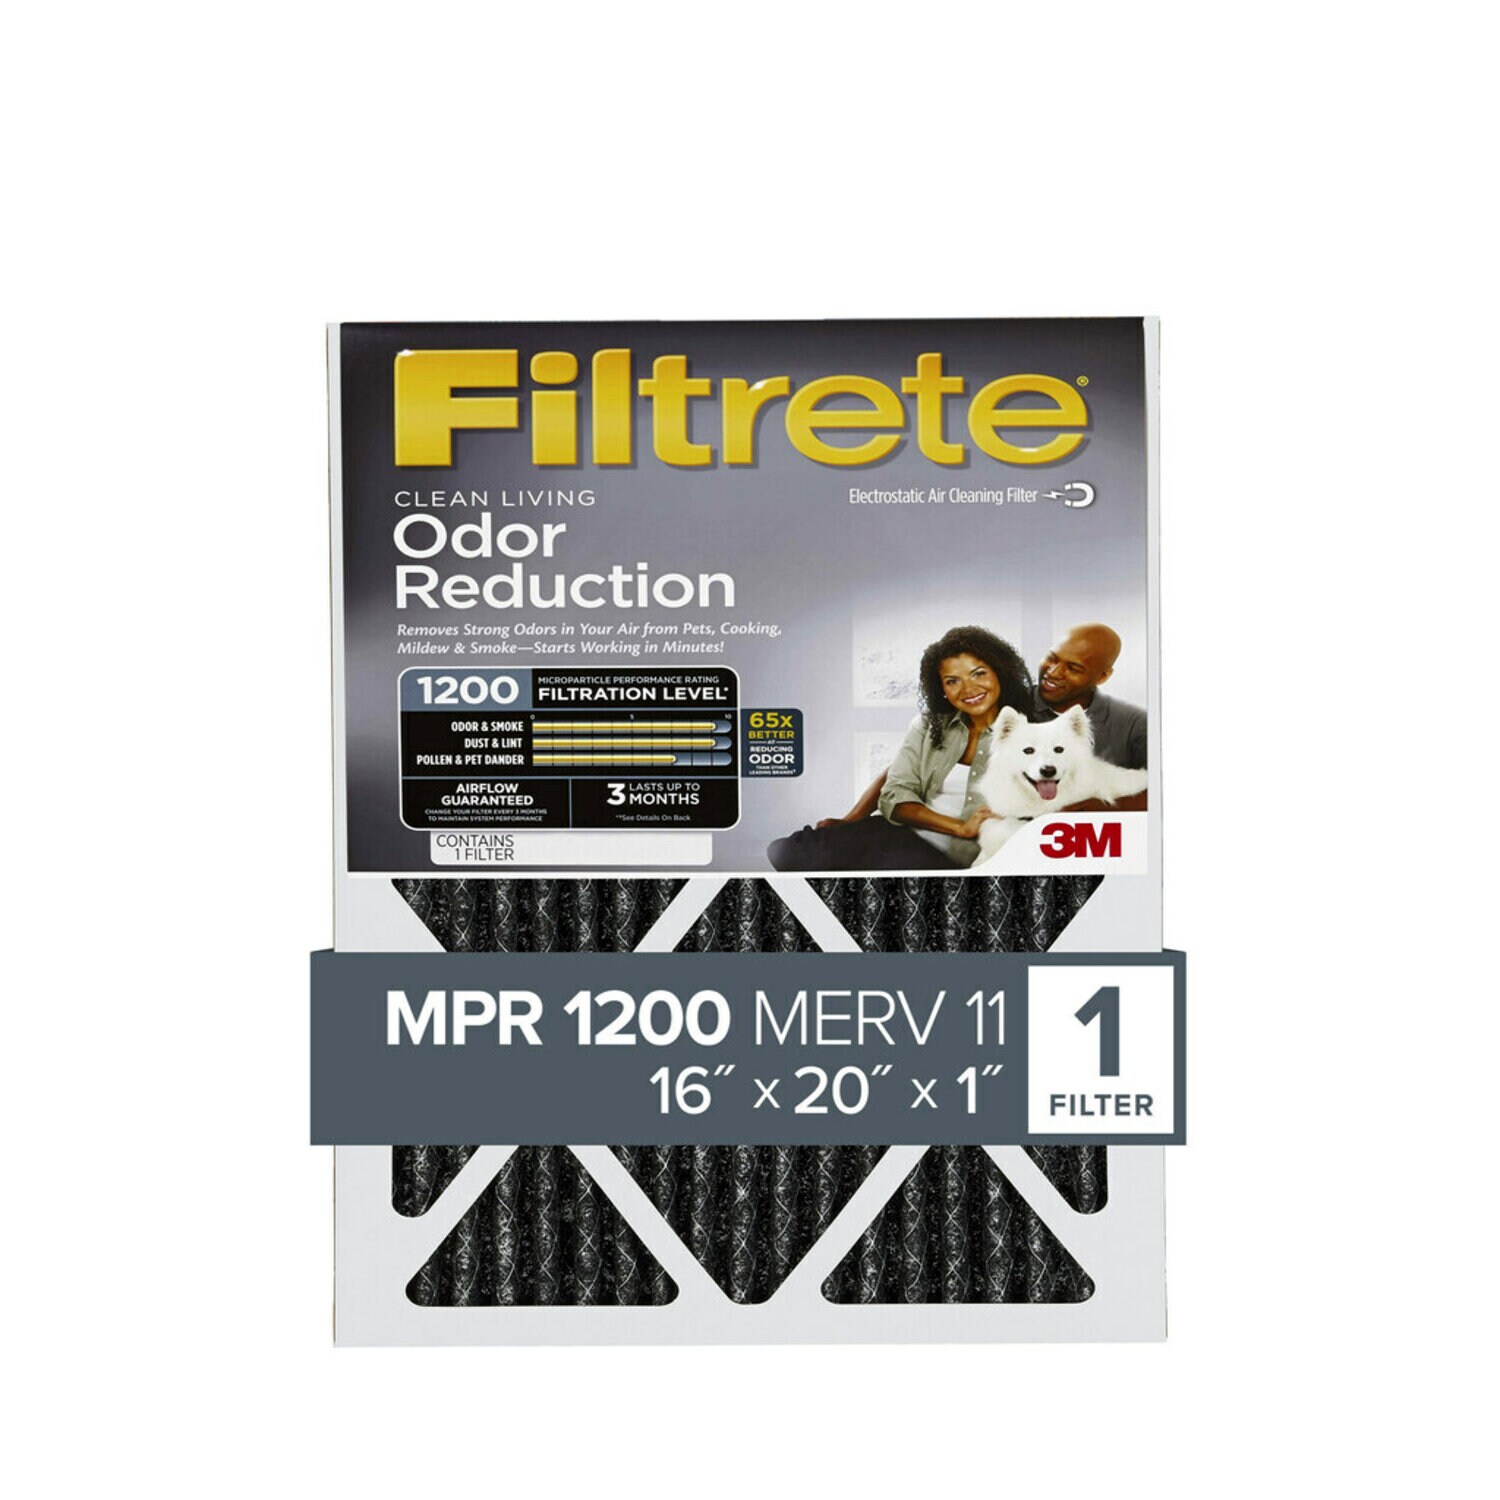 7010273562 - Filtrete Home Odor Reduction Filter HOME00-4, 16 in x 20 in x 1 in
(40,6 cm x 50,8 cm x 2,5 cm)